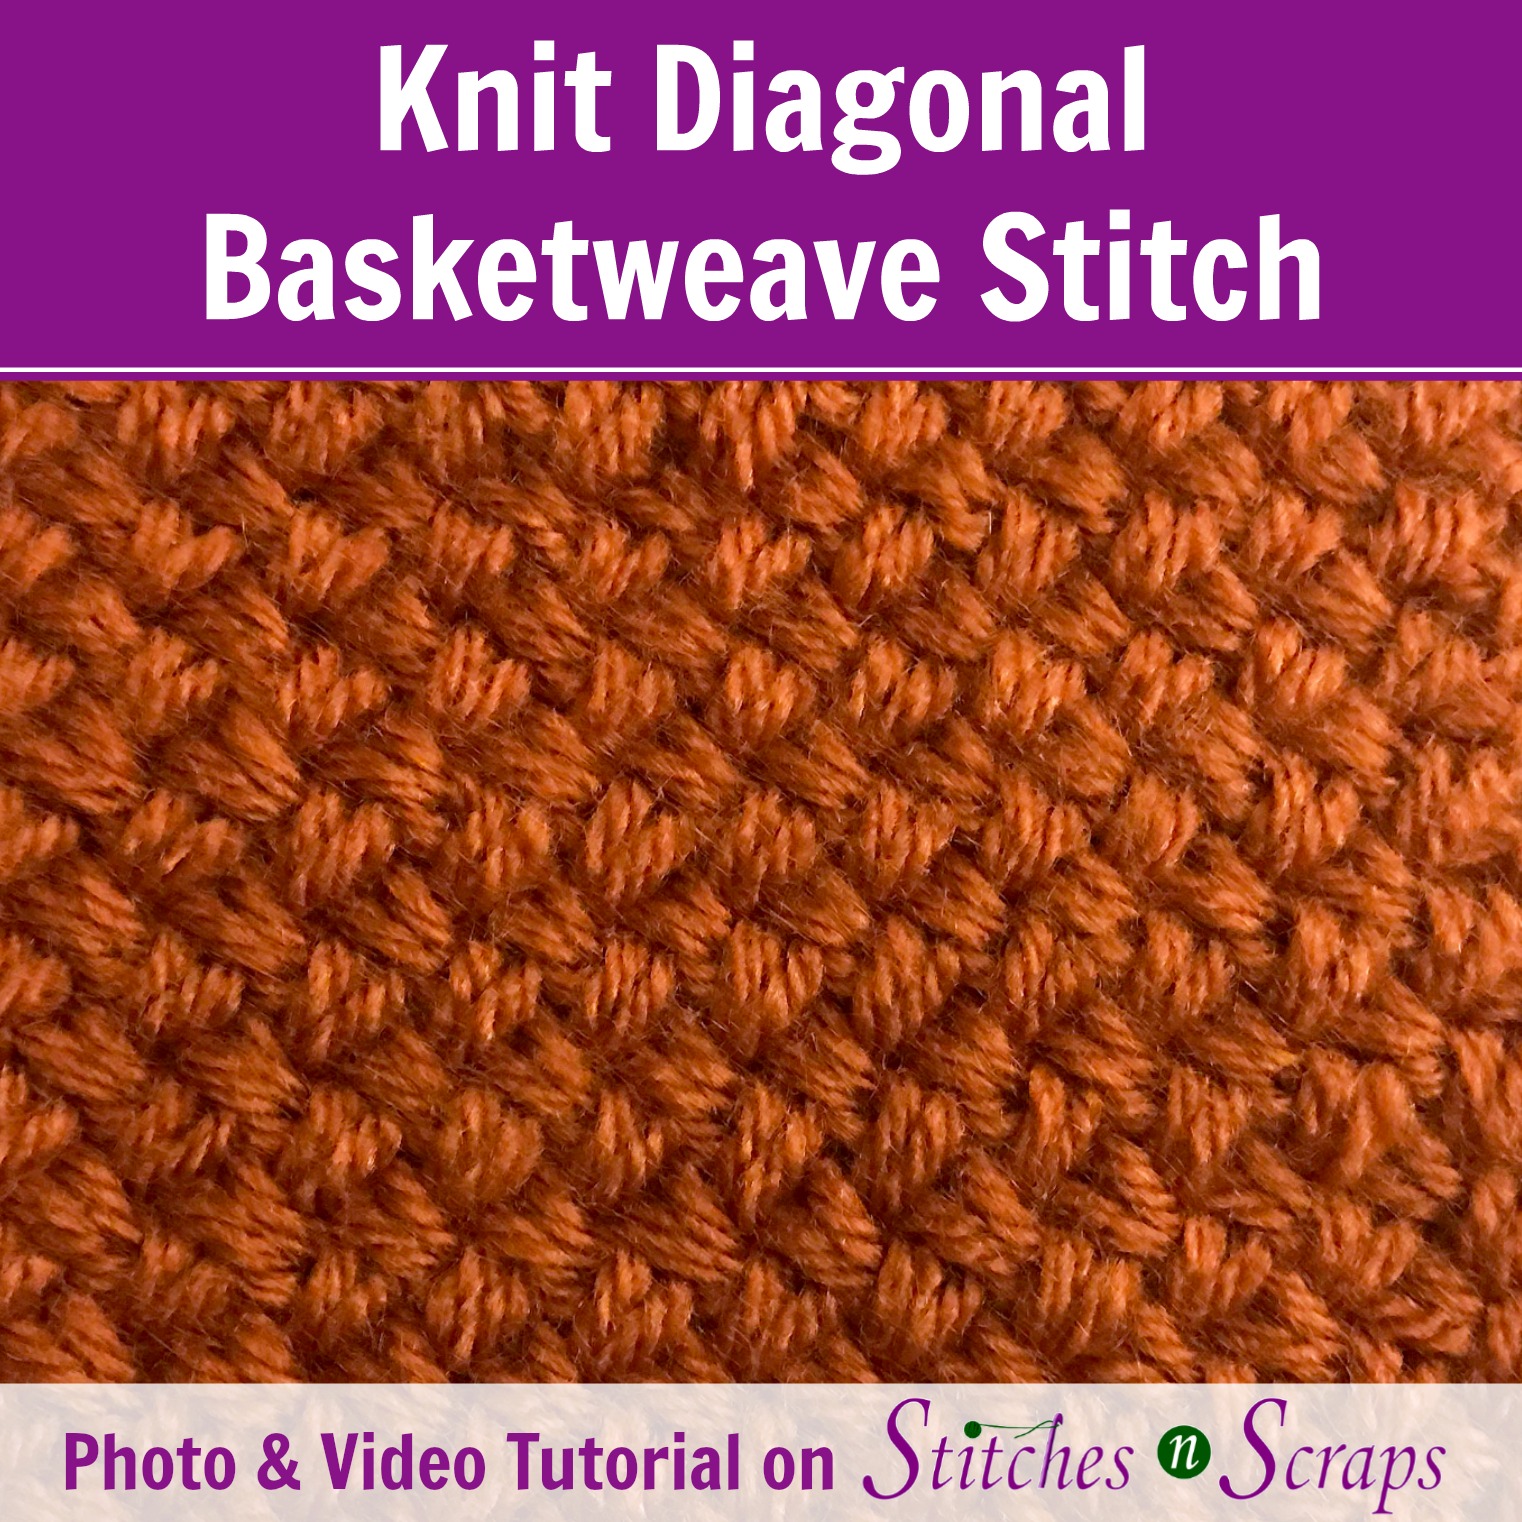 Knit Diagonal Basketweave Stitch - Tutorial on Stitches n Scraps